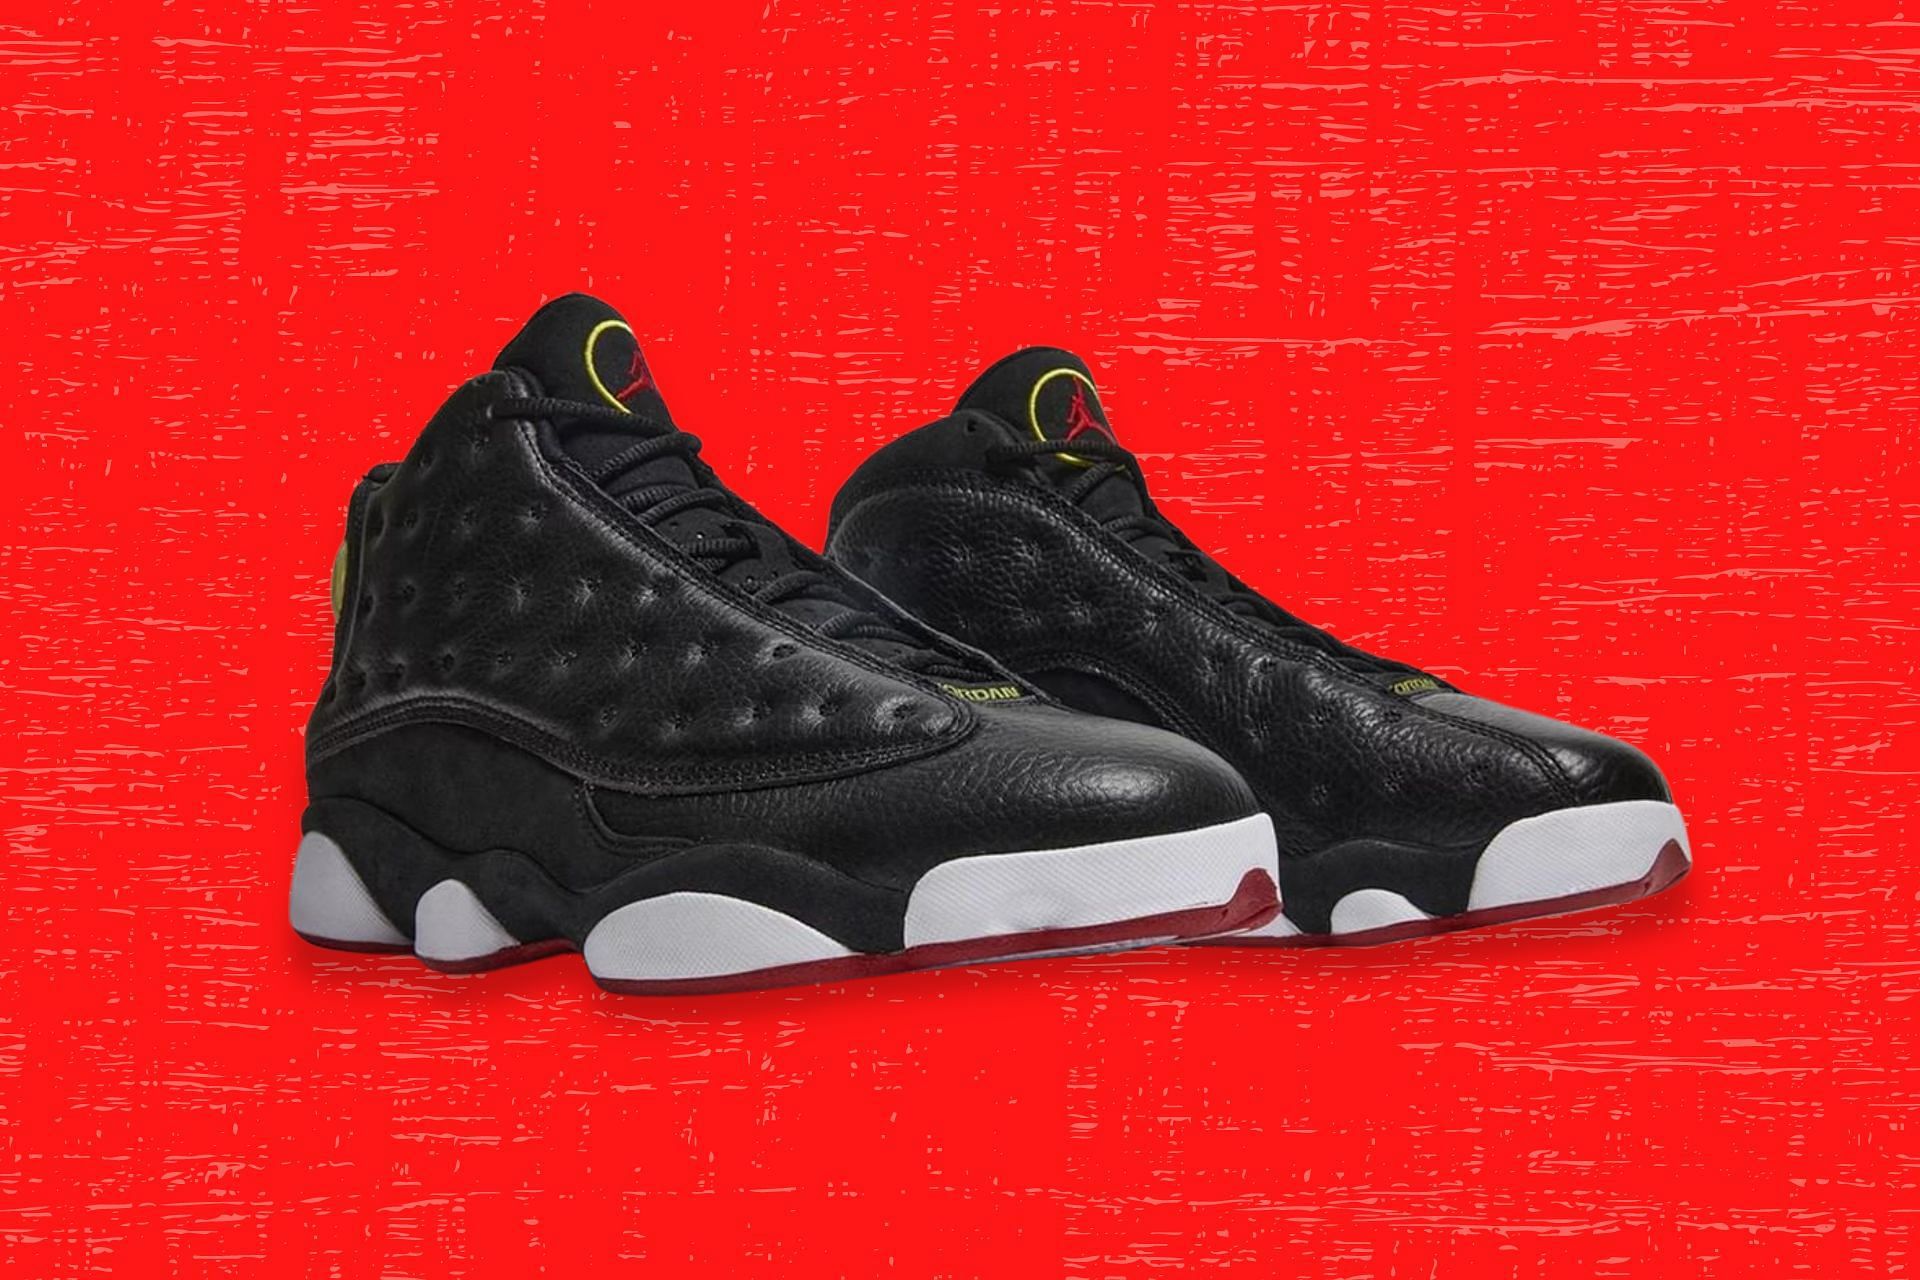 Air Jordan 13 Playoffs shoes (Image via Nike)